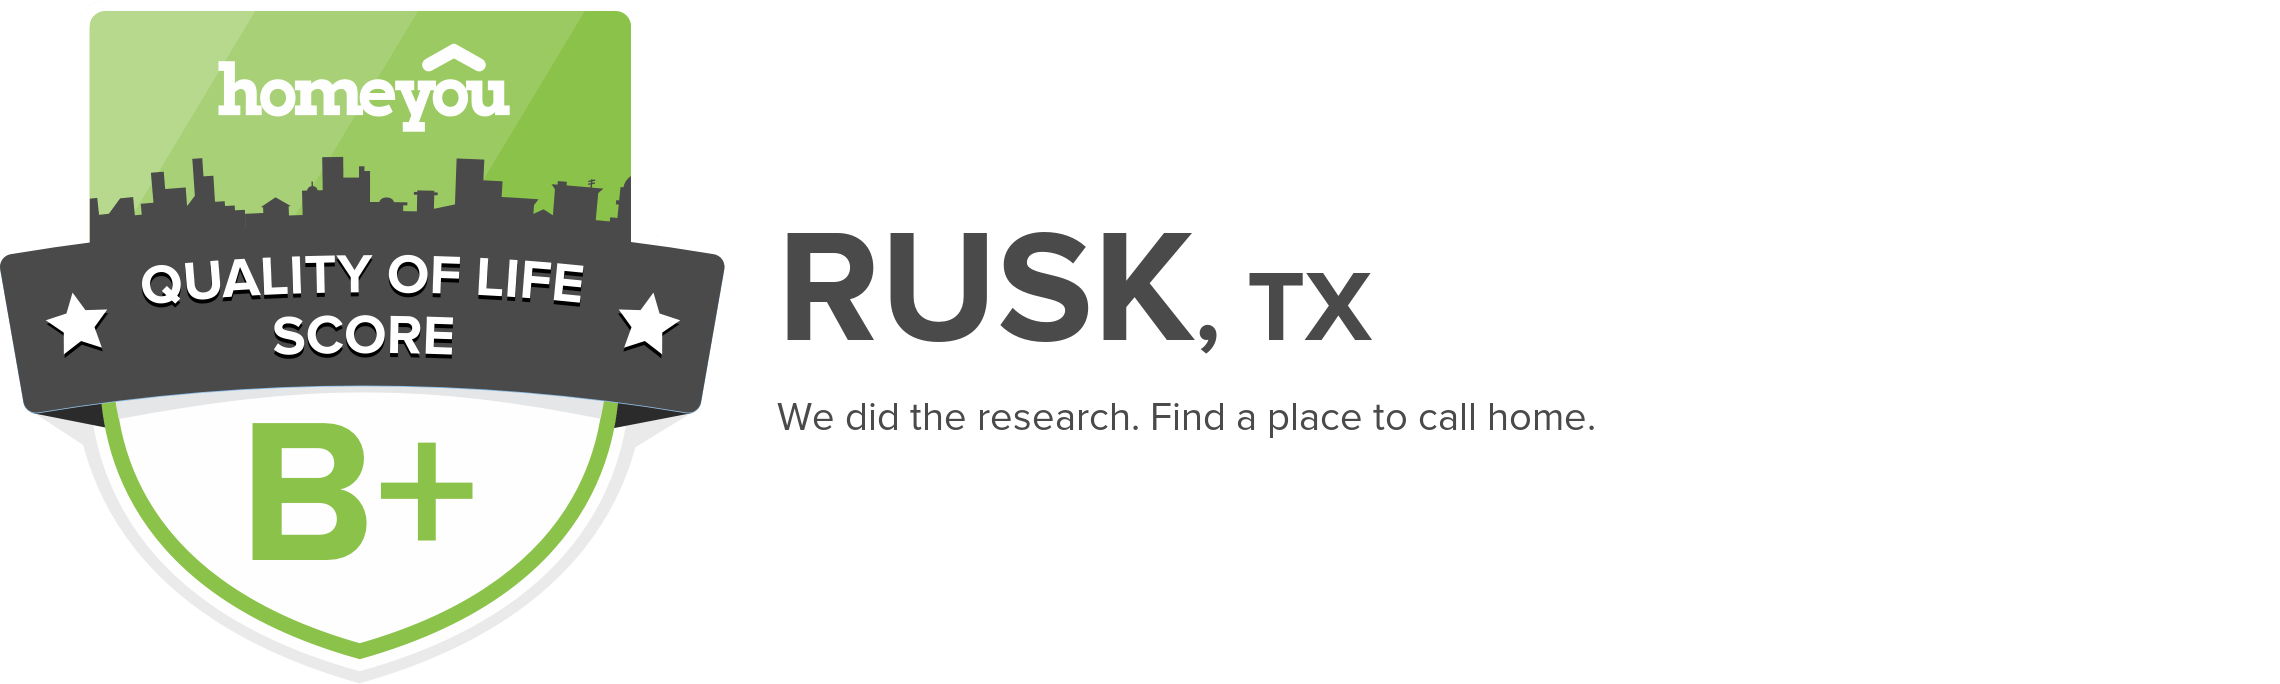 Rusk, TX